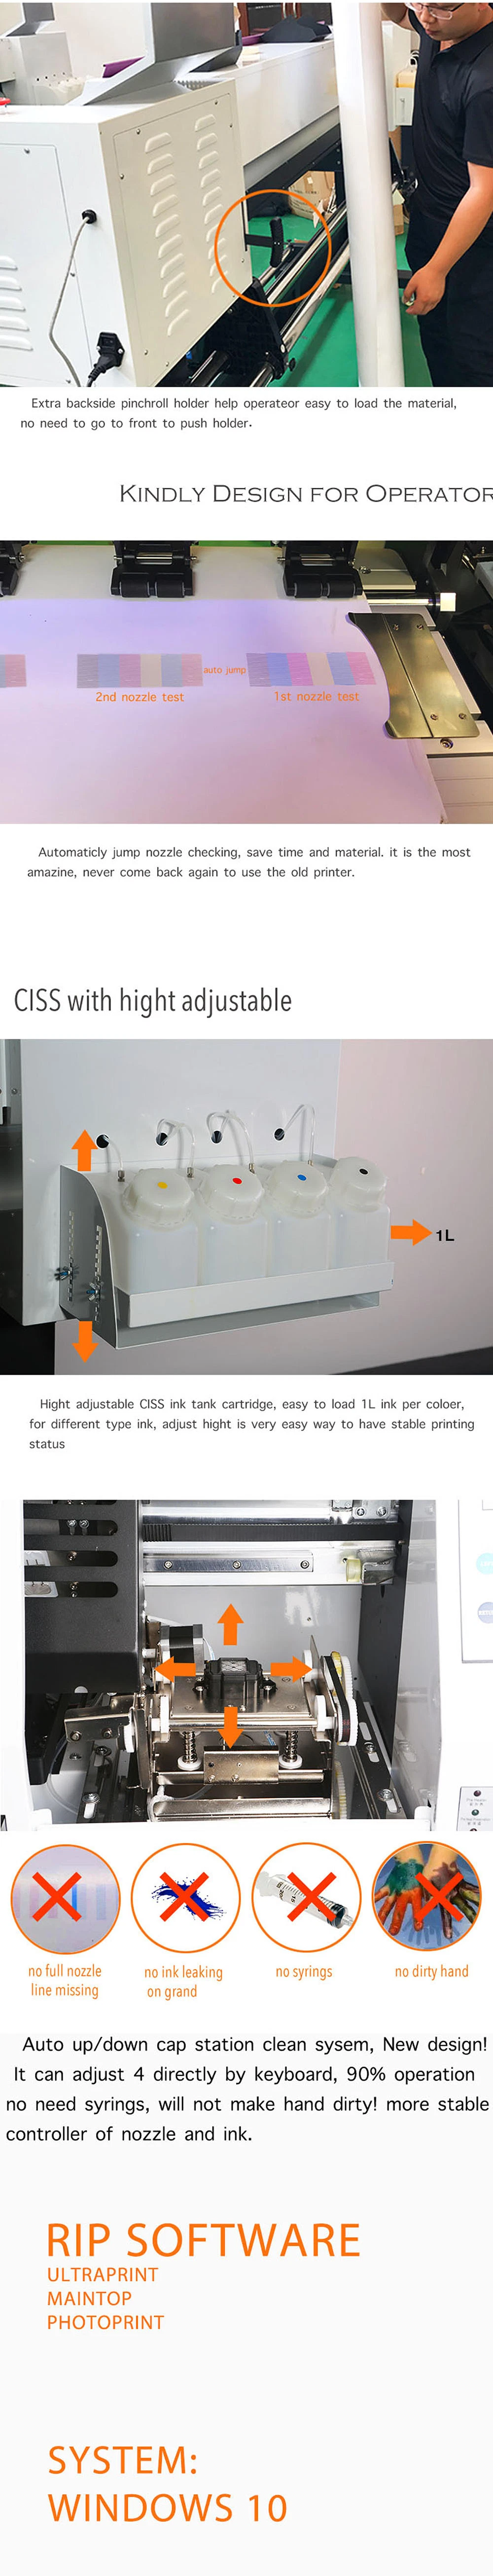 Tecjet S 18X1 XP600 Printhead Eco Solvent Printer for Flex Banner